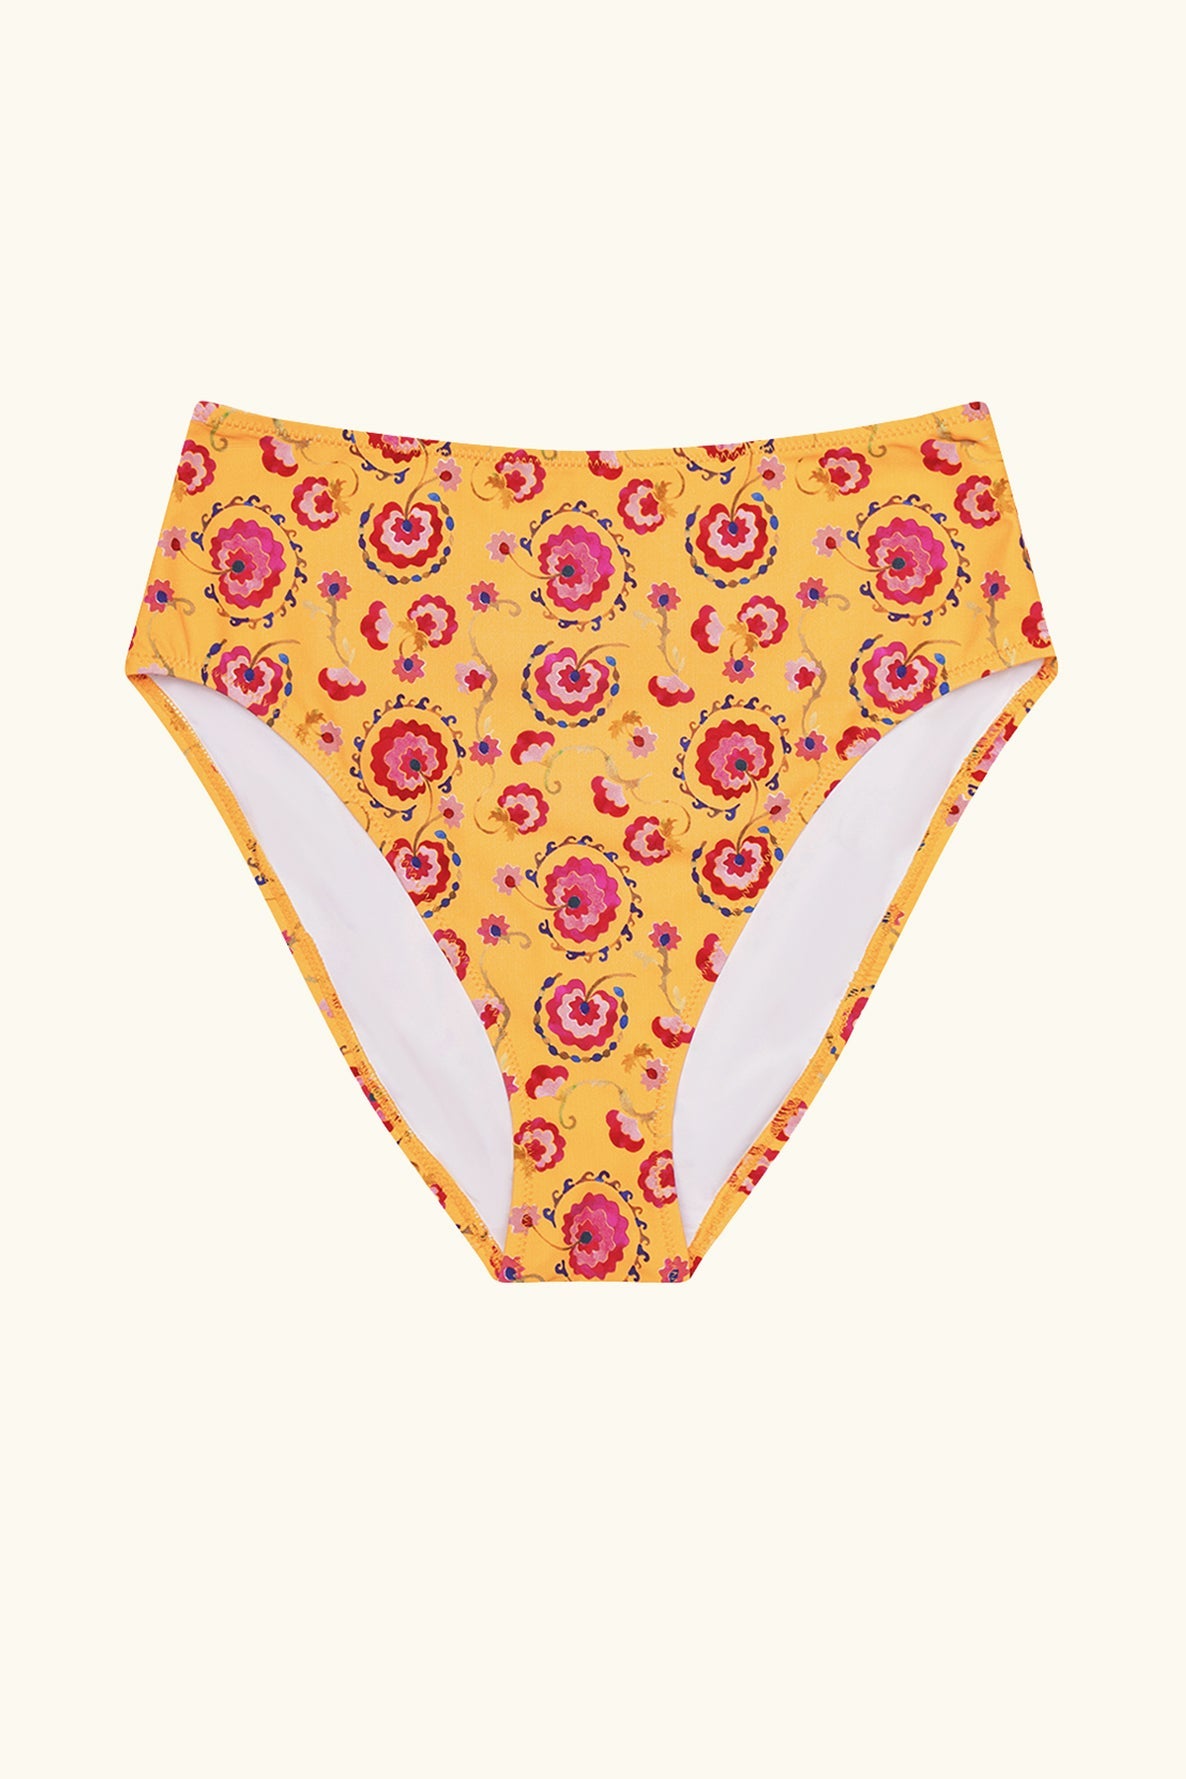 eco conscious swimwear retro inspired high waisted bikini bottom yellow with pink floral print